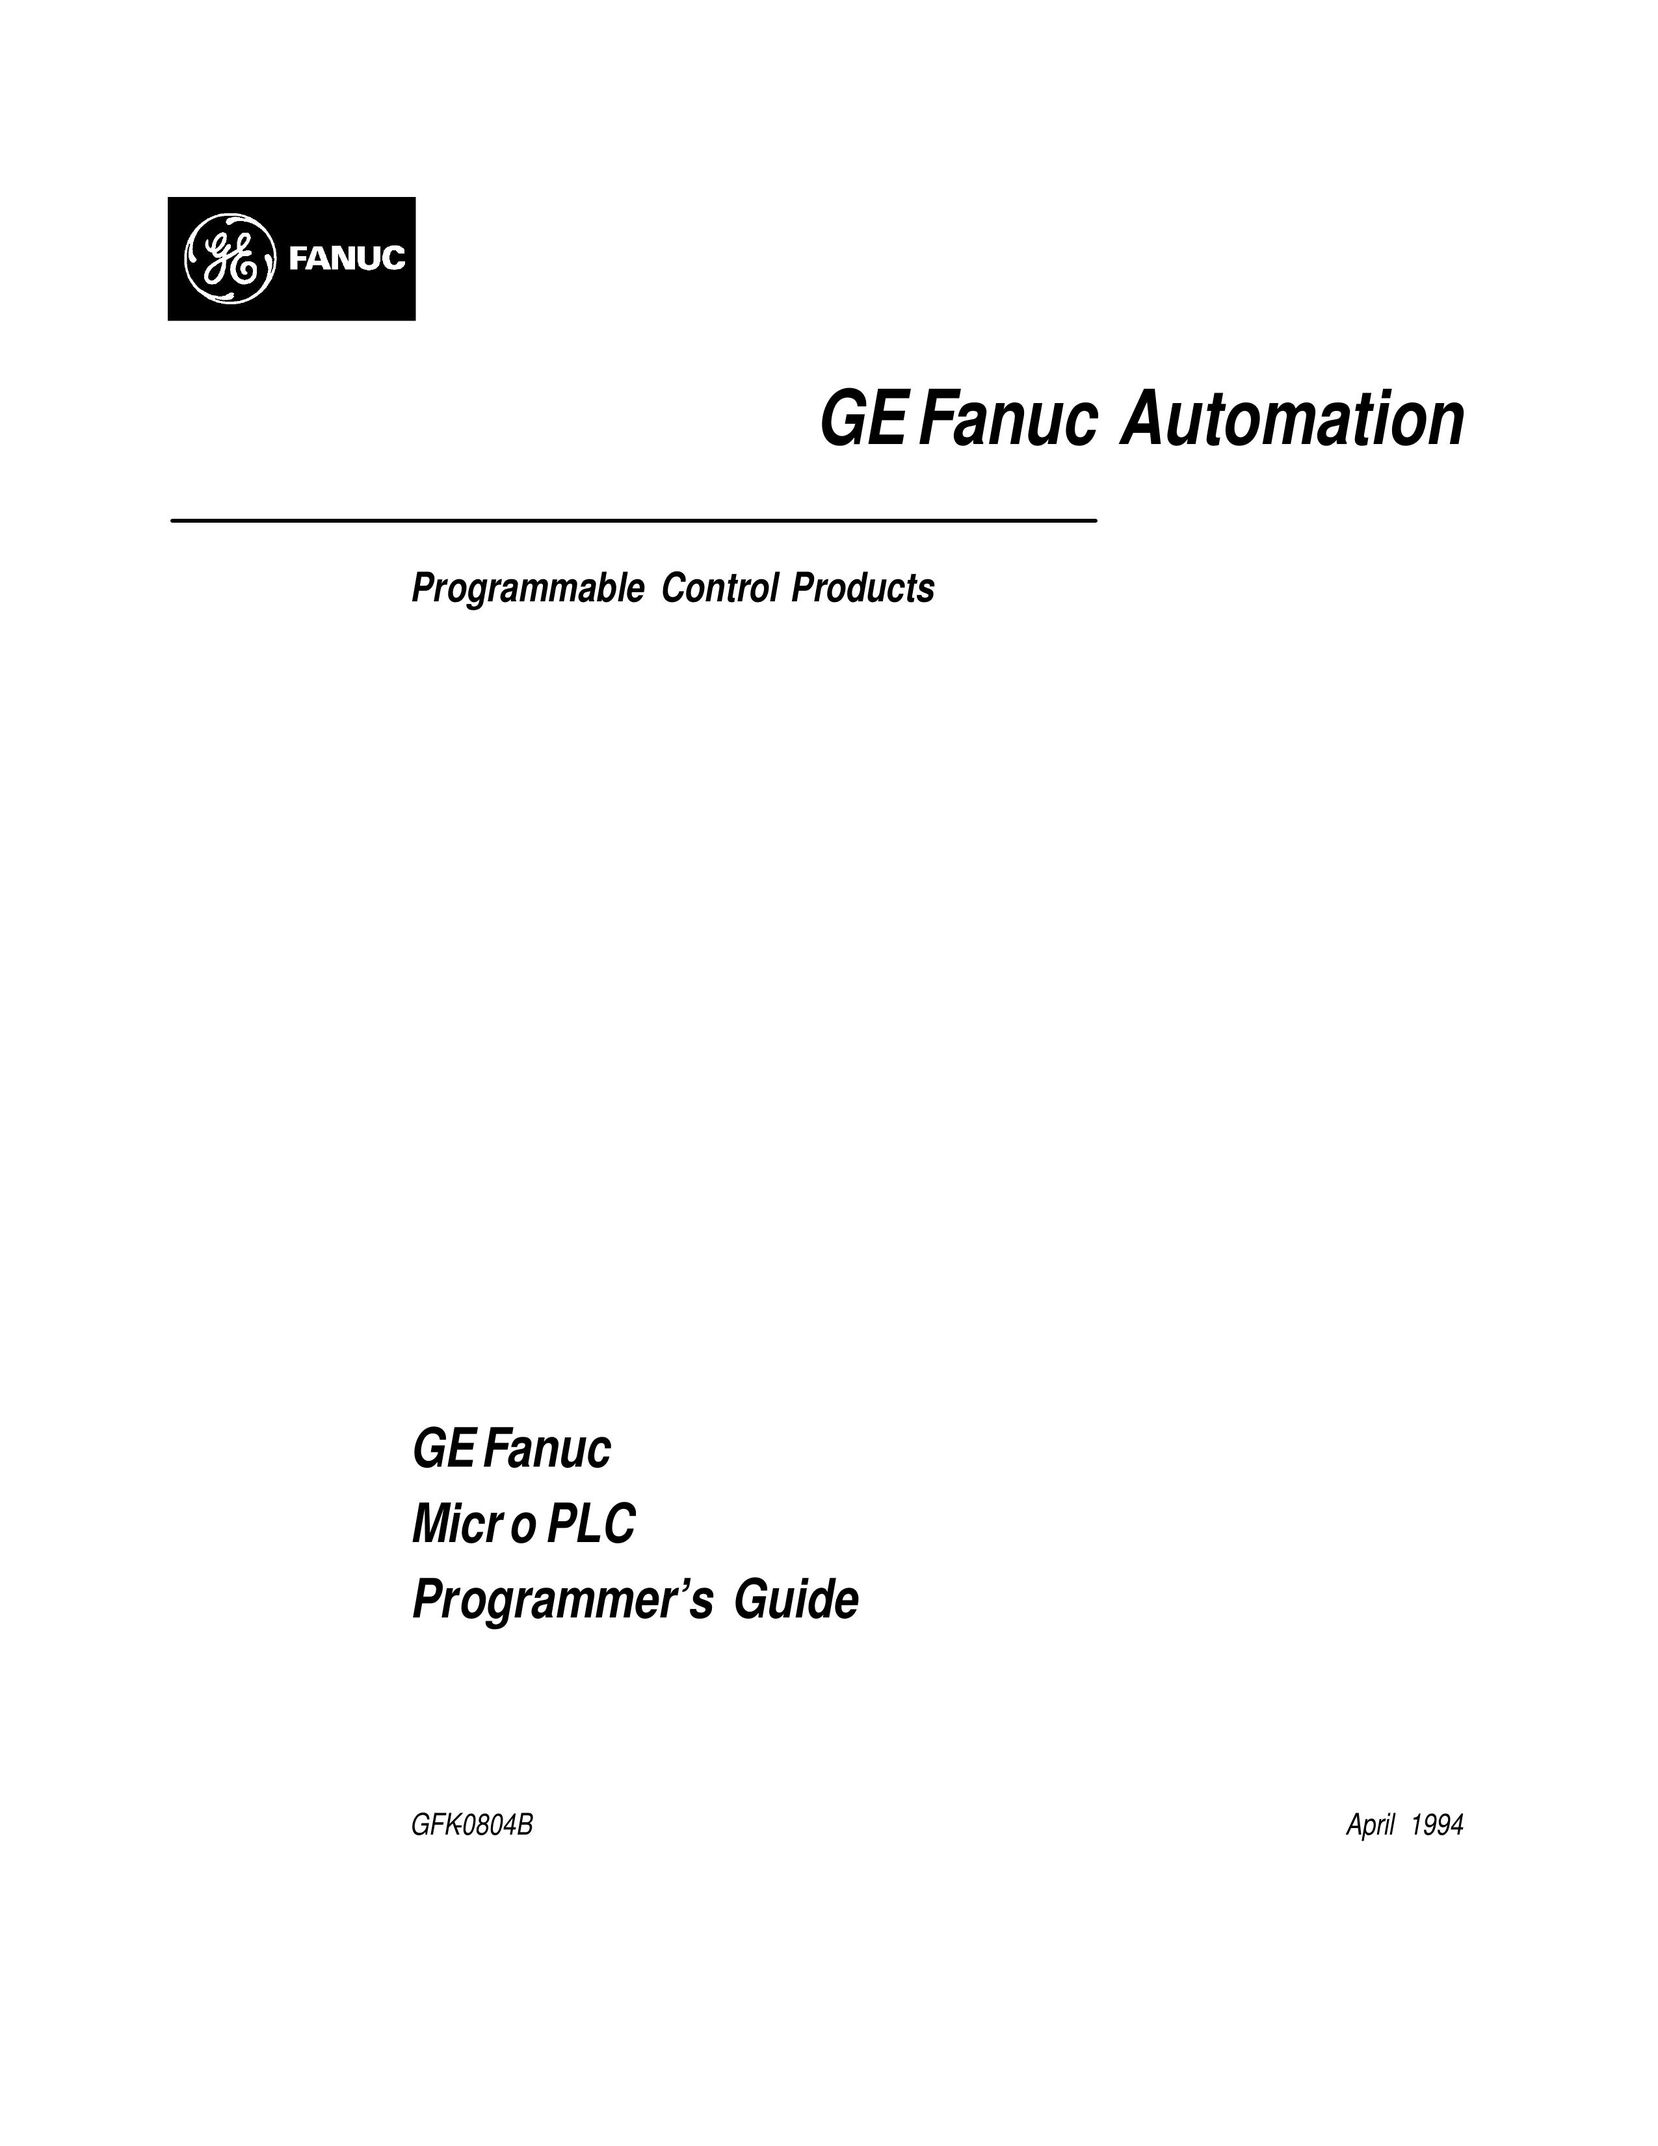 GE GFK-0804B Universal Remote User Manual